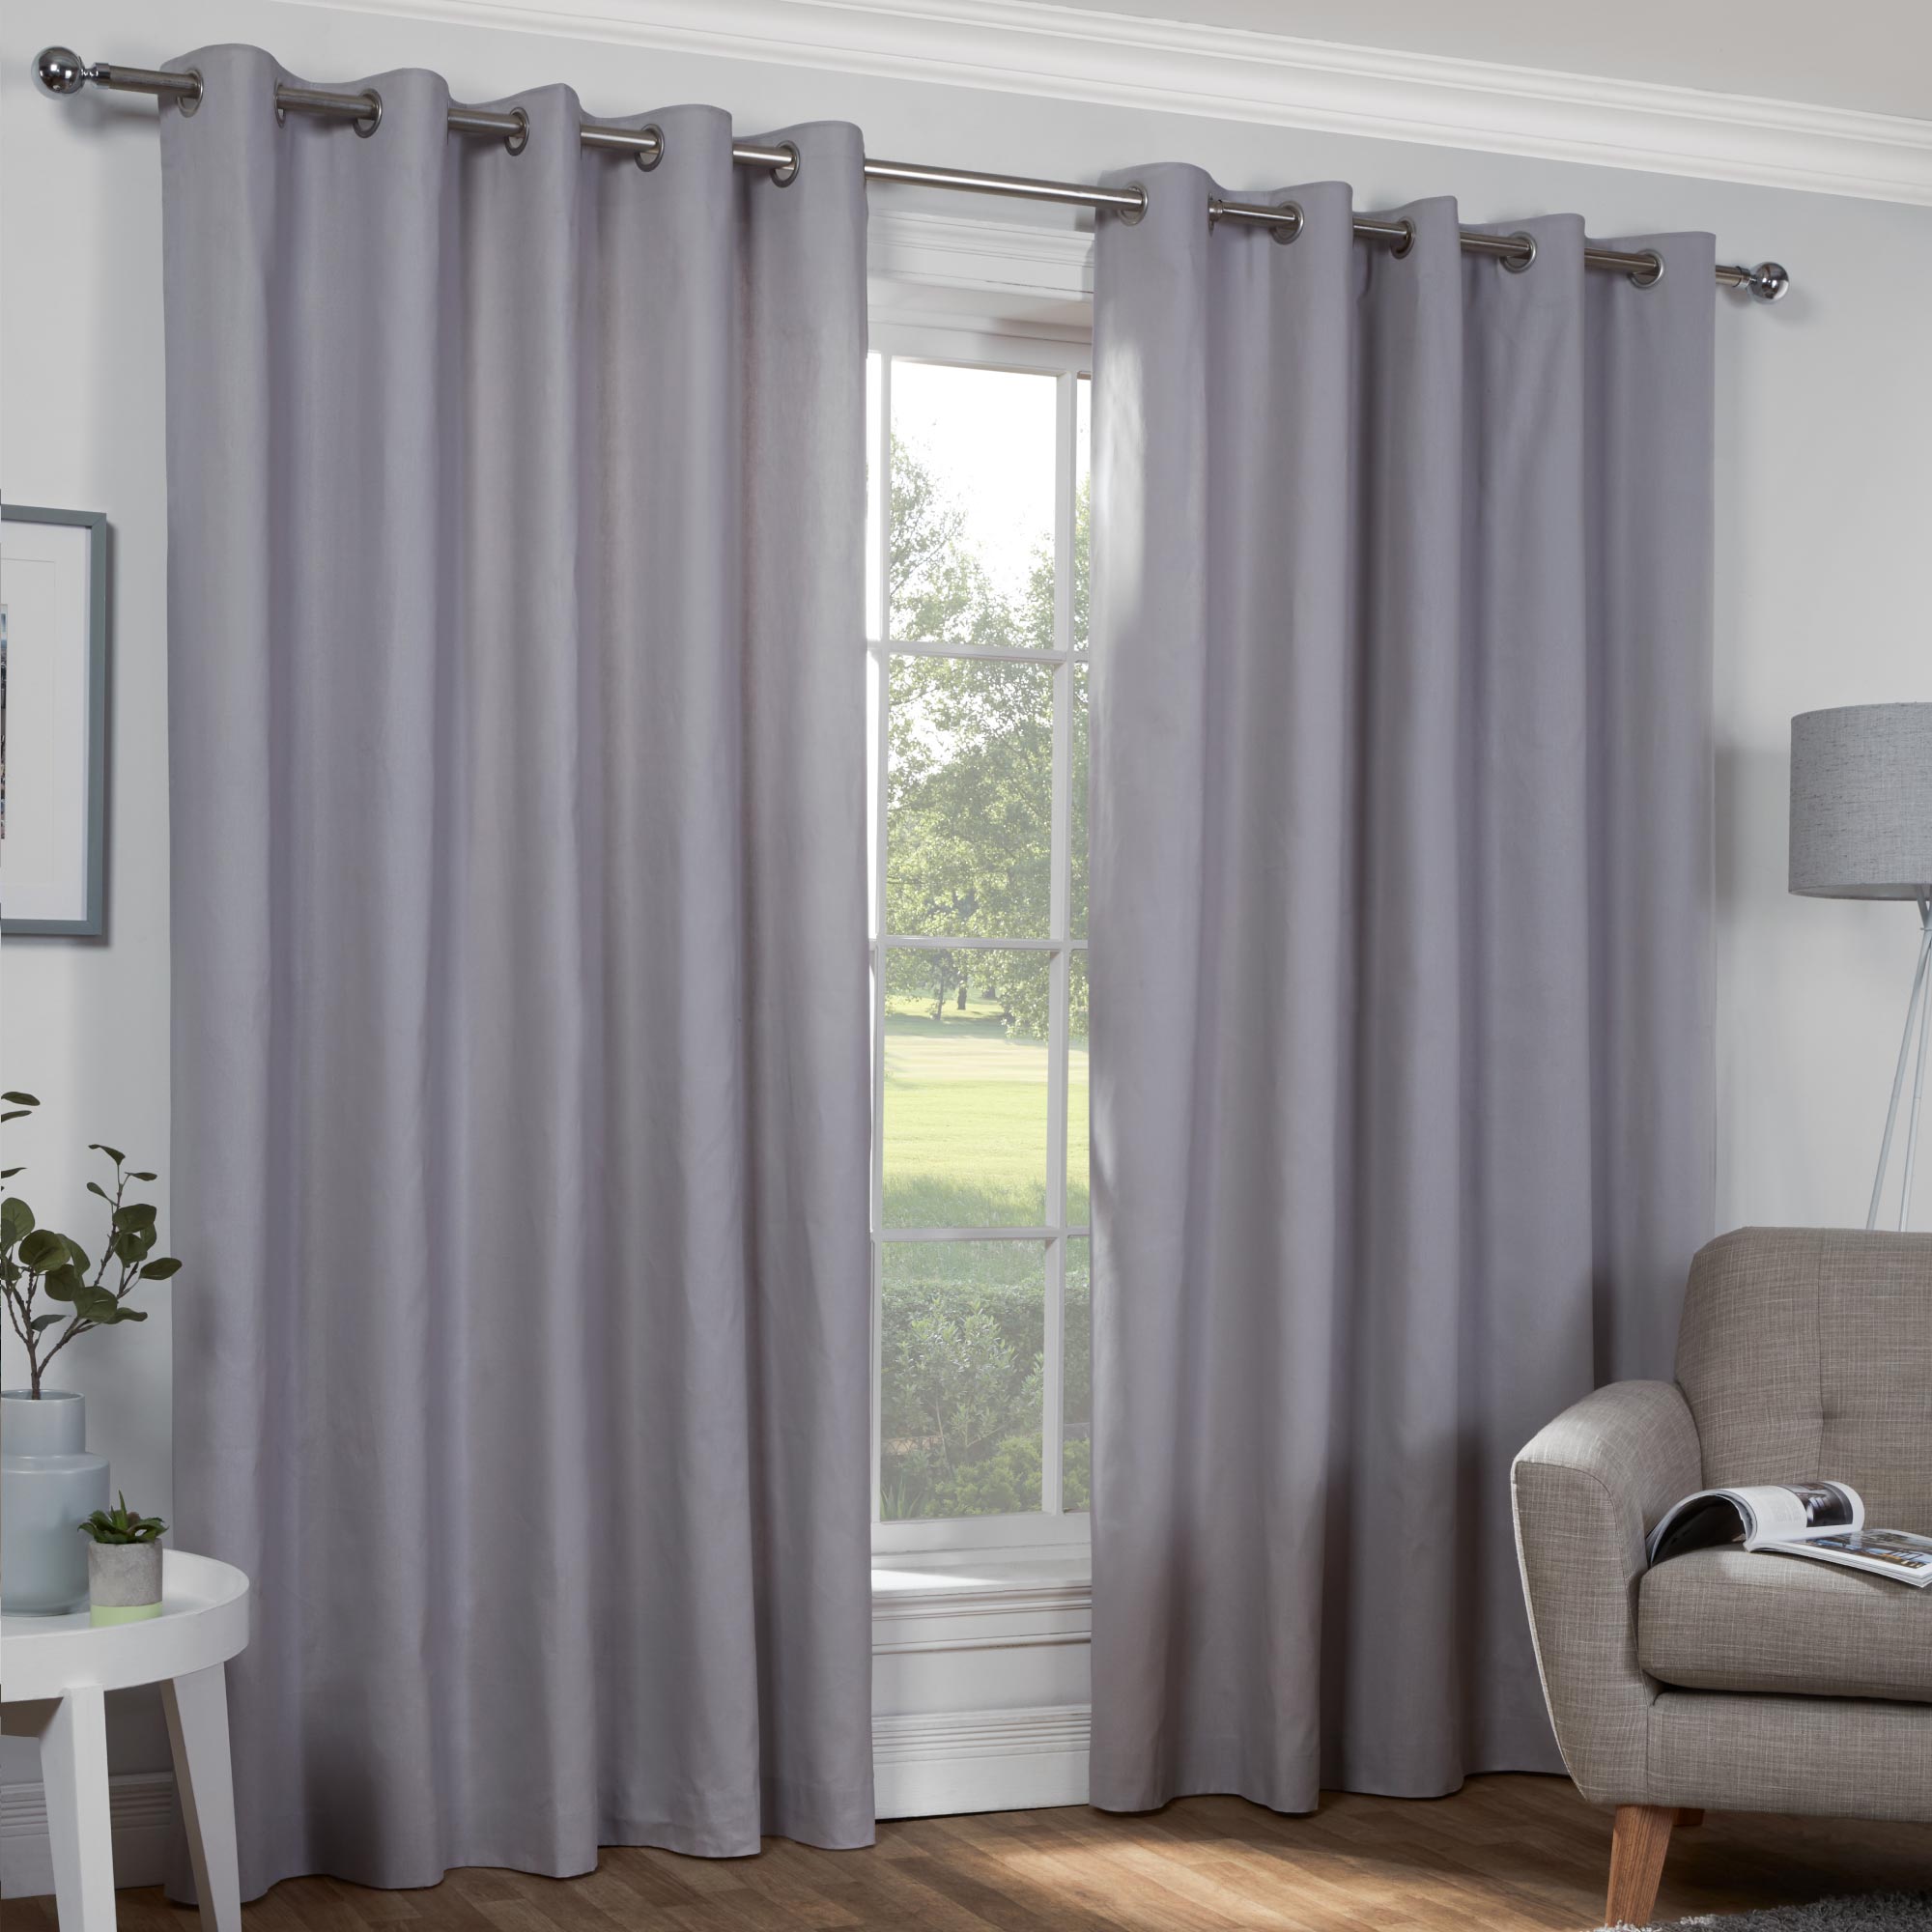 Lewis’s Naples Pure Cotton Eyelet Curtains - Silver - 117x137cm (46x54")  | TJ Hughes